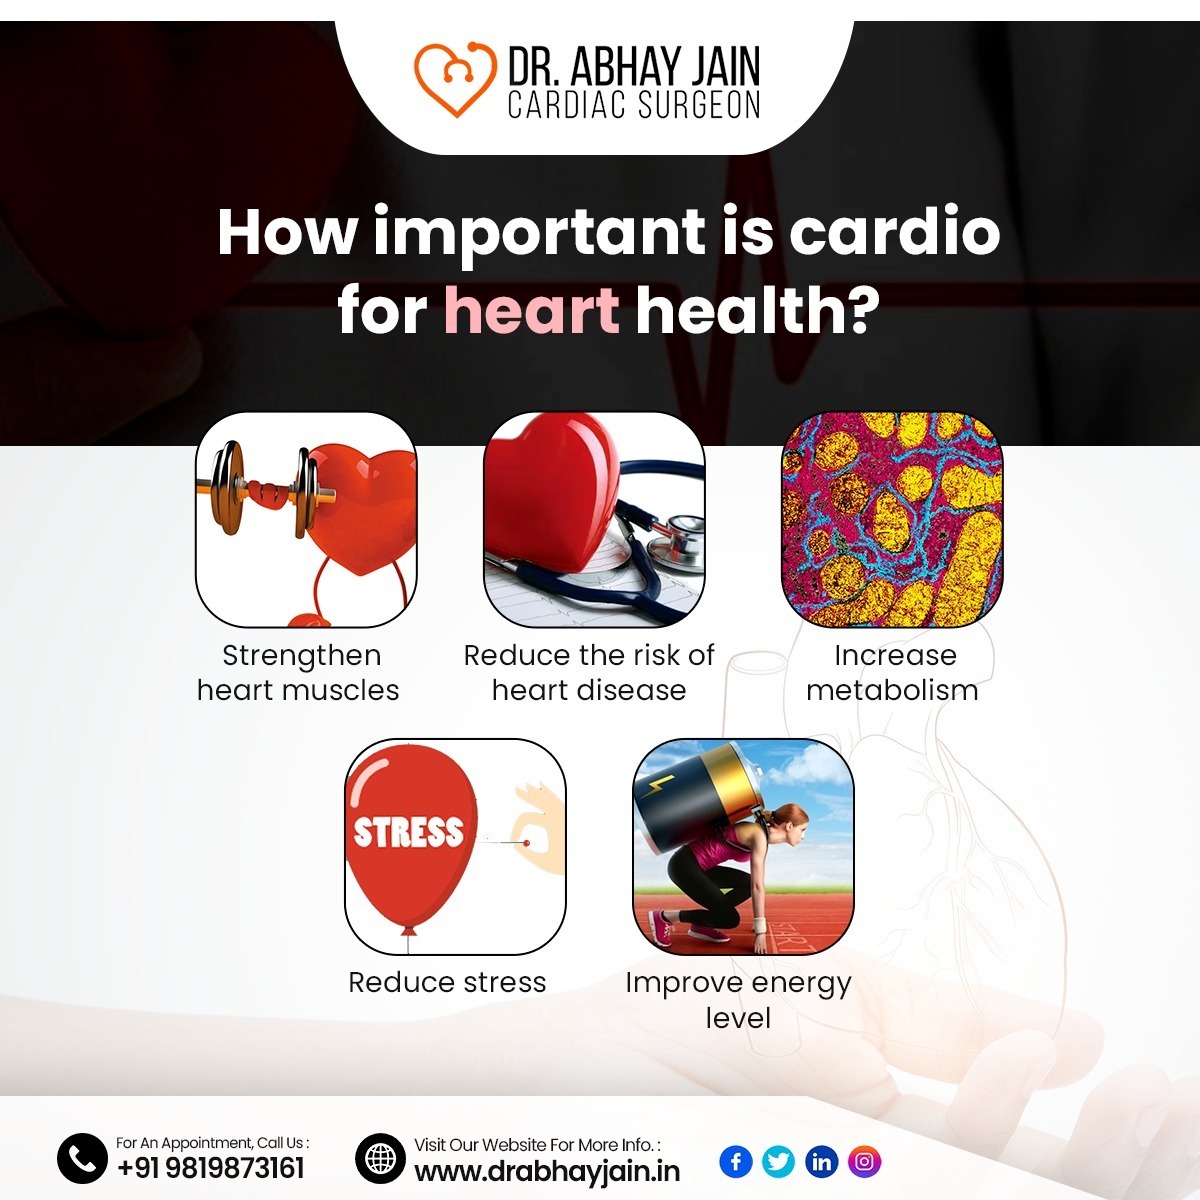 cardiac surgeon in mumbai dr. abhay jain